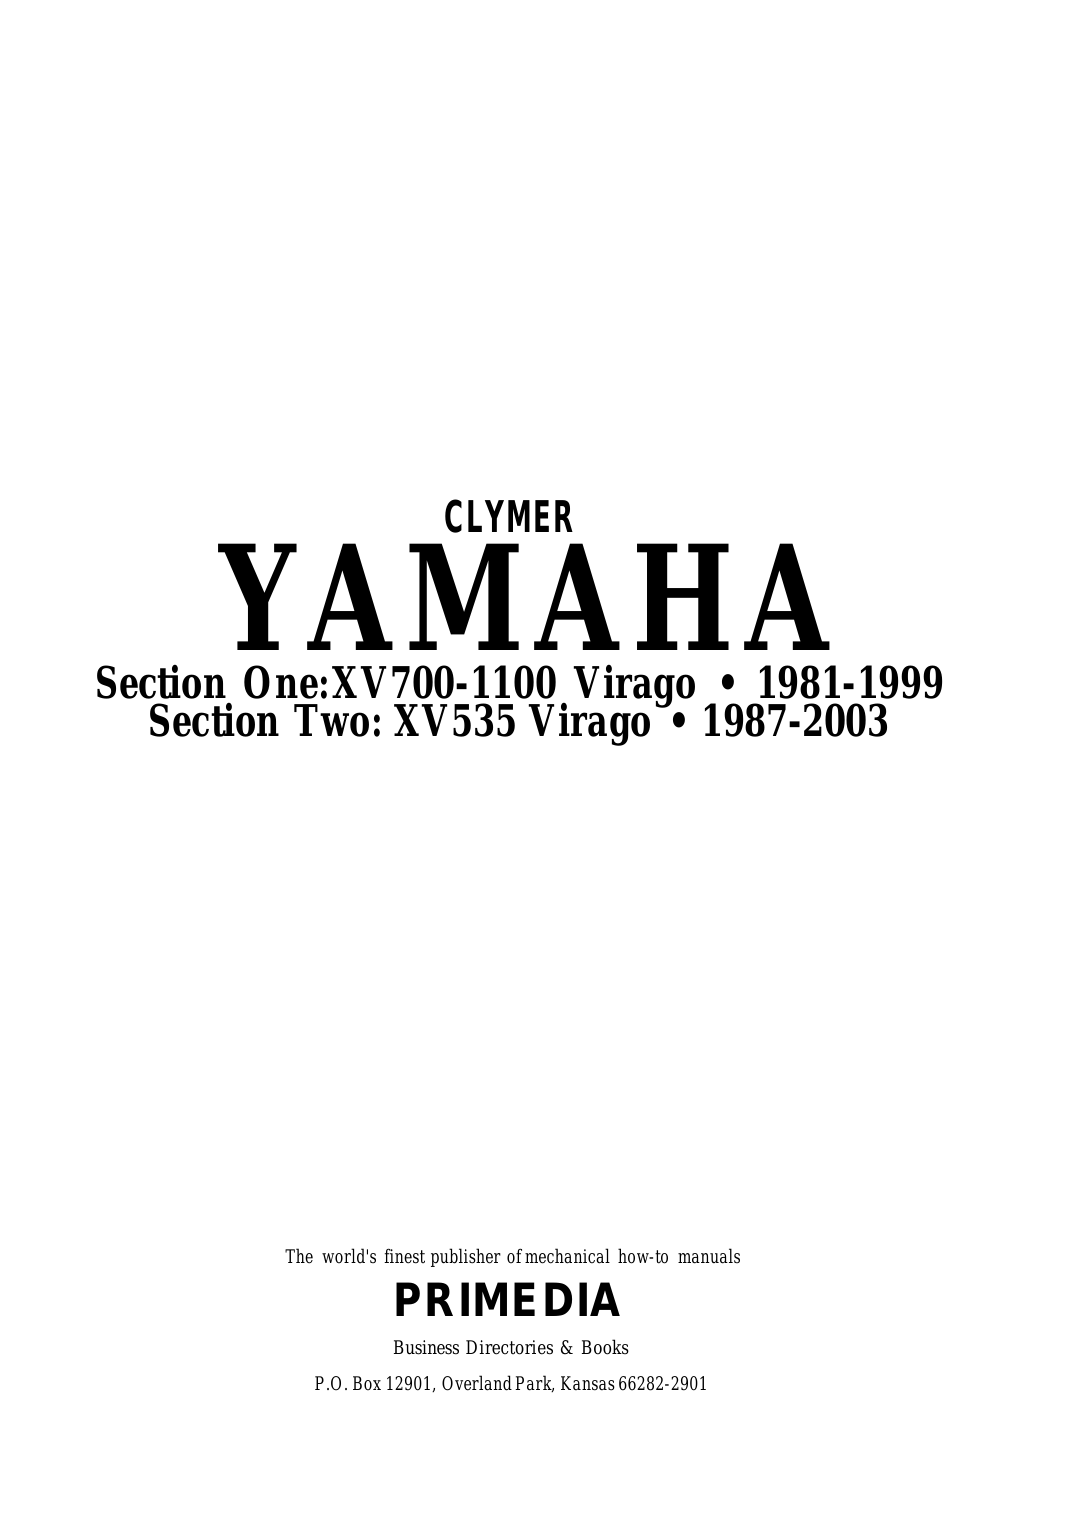 1981-2003 Yamaha XV 535-1100 Virago service repair manual Preview image 2